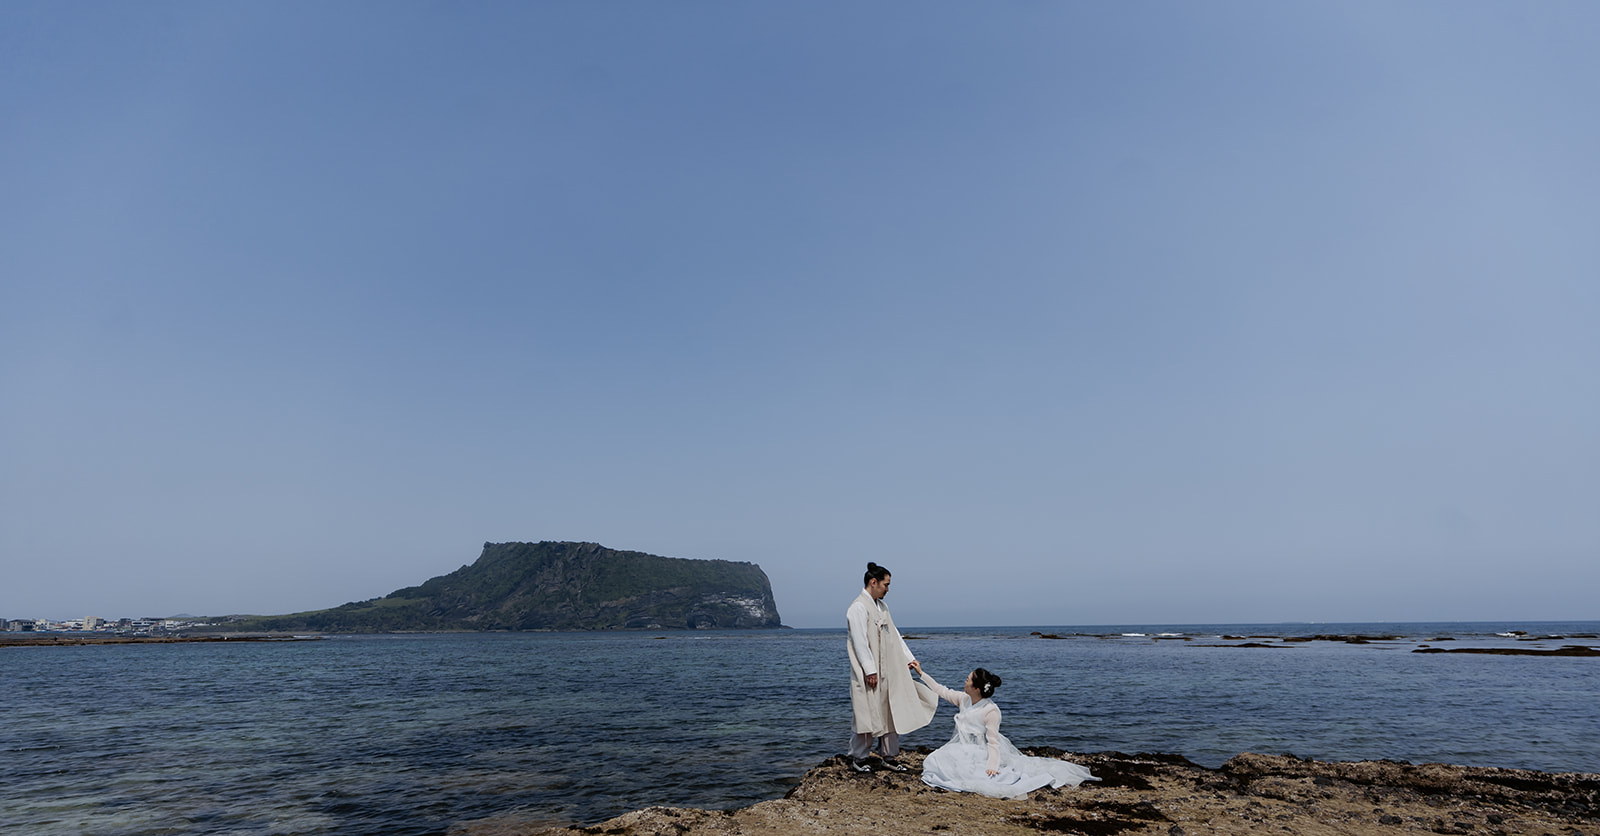 The couple stood on rocks near the ocean during their pre-wedding photoshoot in Korea.